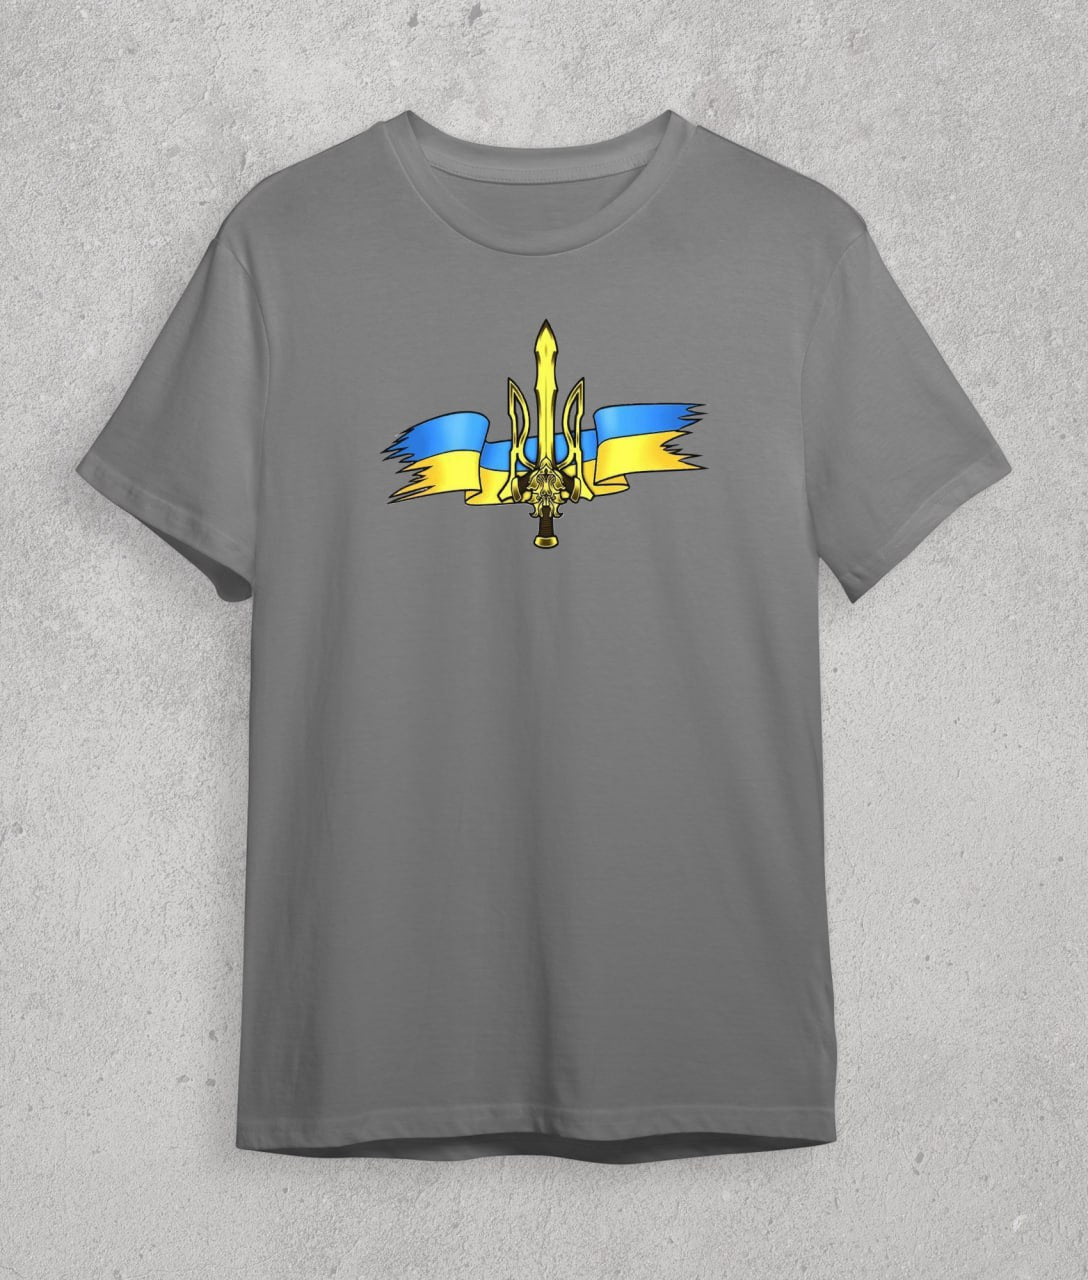 T-shirt Ukrainian Trident (sword)